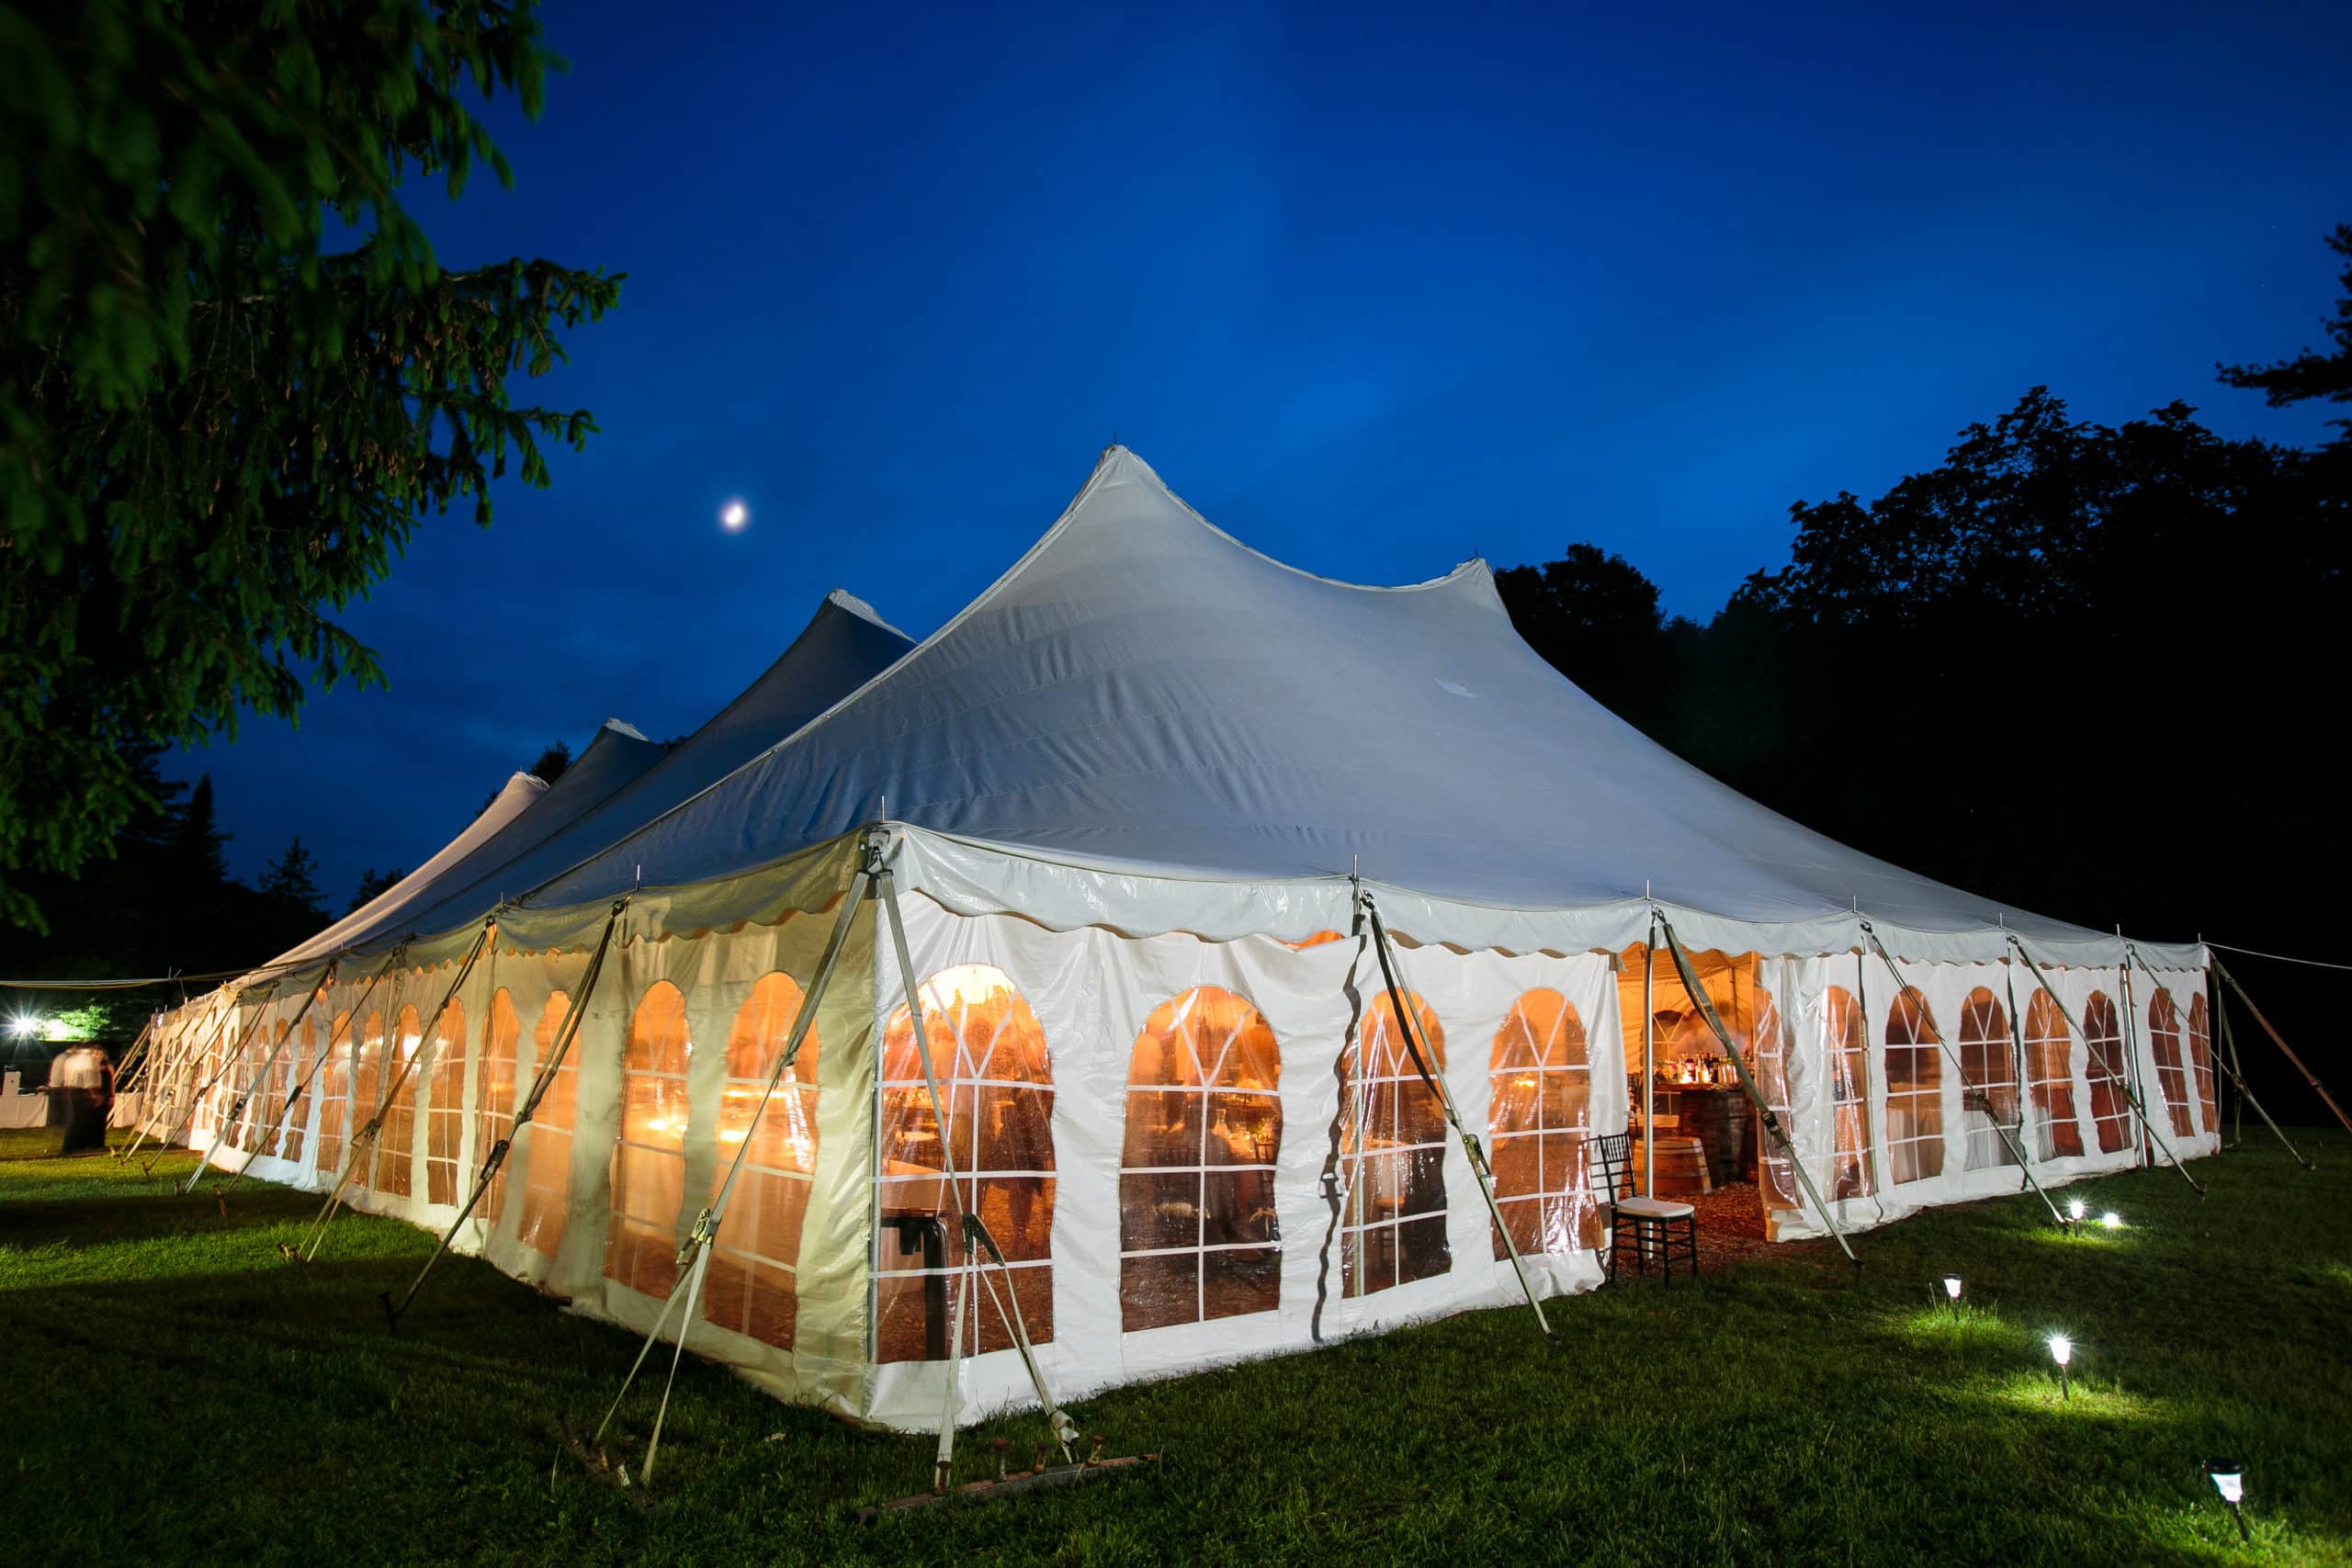 Is Tent Rental Still a Good Idea in the Fall?